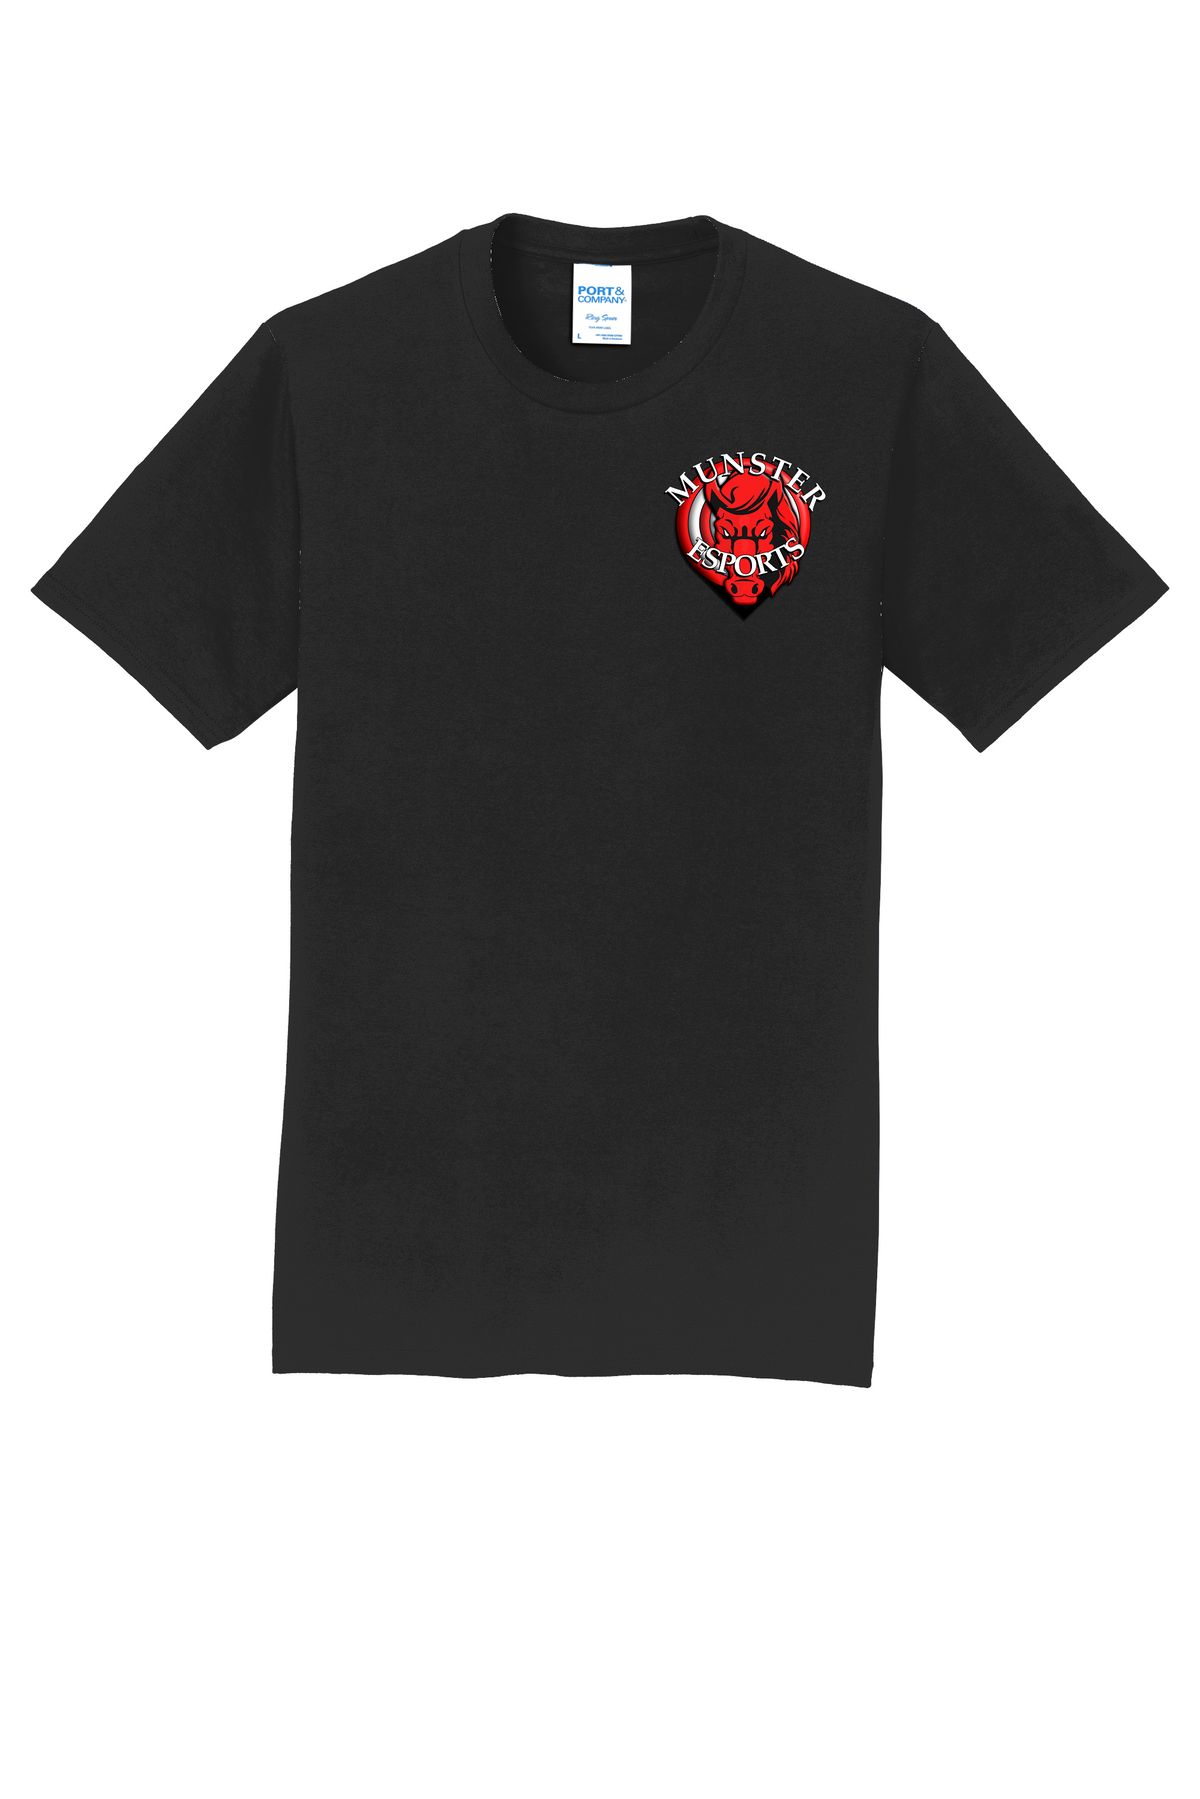 Munster HS | Street Series | [DTF] Unisex Short Sleeve T-Shirt {#MHS001}